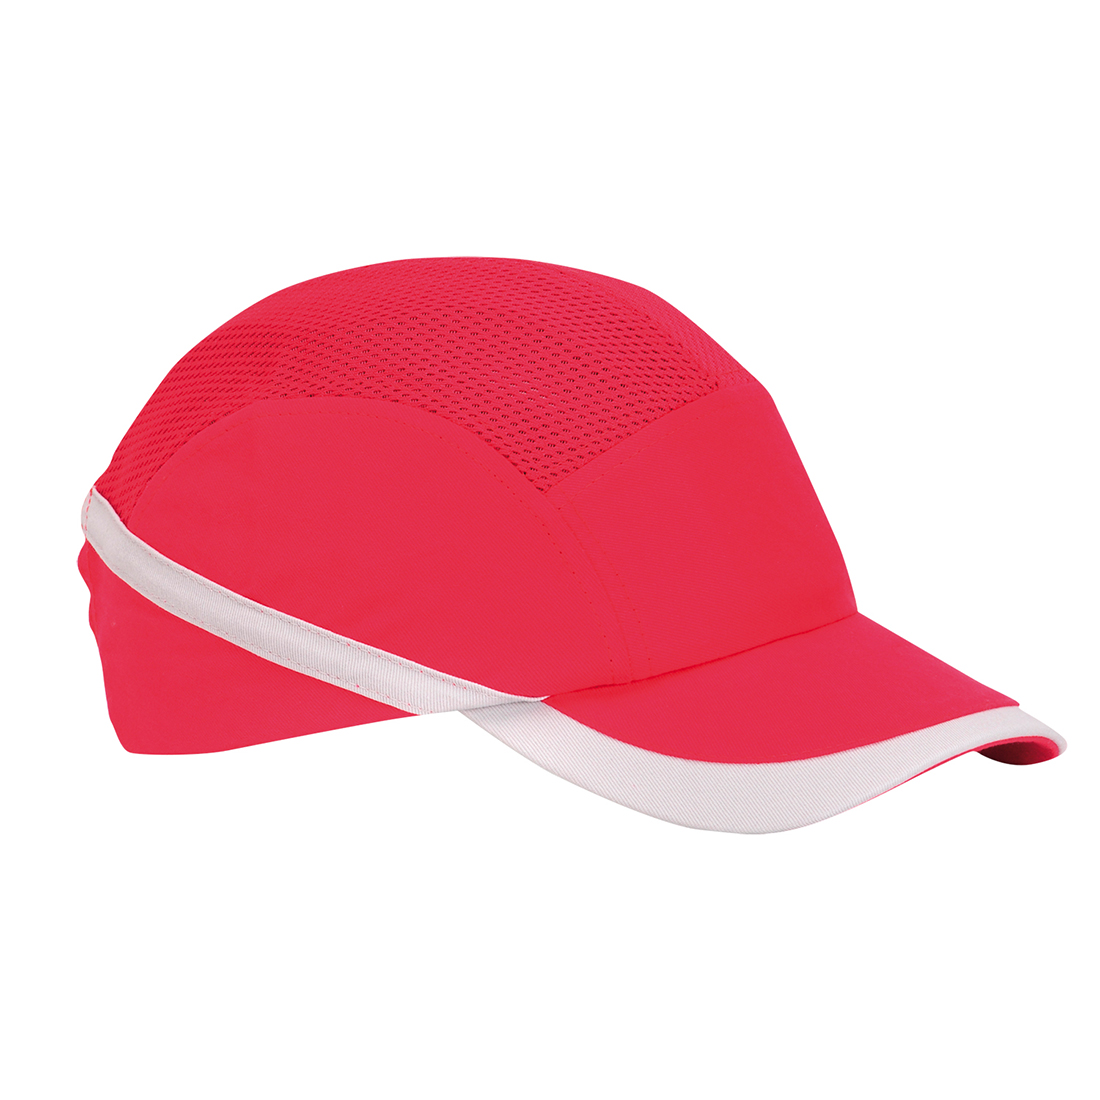 Vent Cool Bump Cap - Red